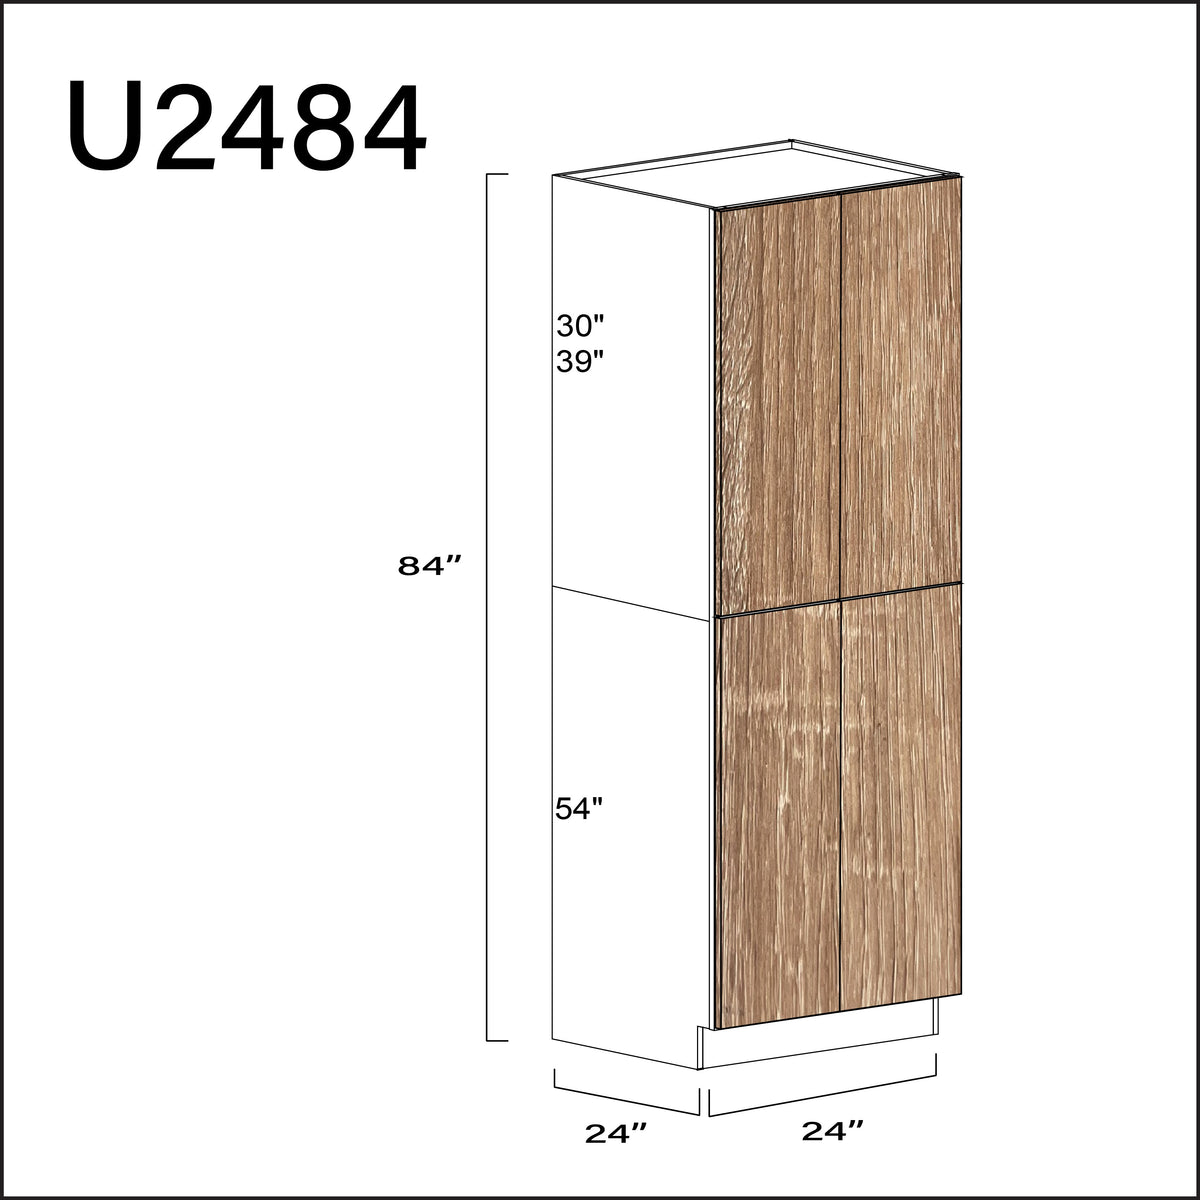 Textured Oak Frameless Double Door Pantry Cabinet - 24" W x 84" H x 24" D